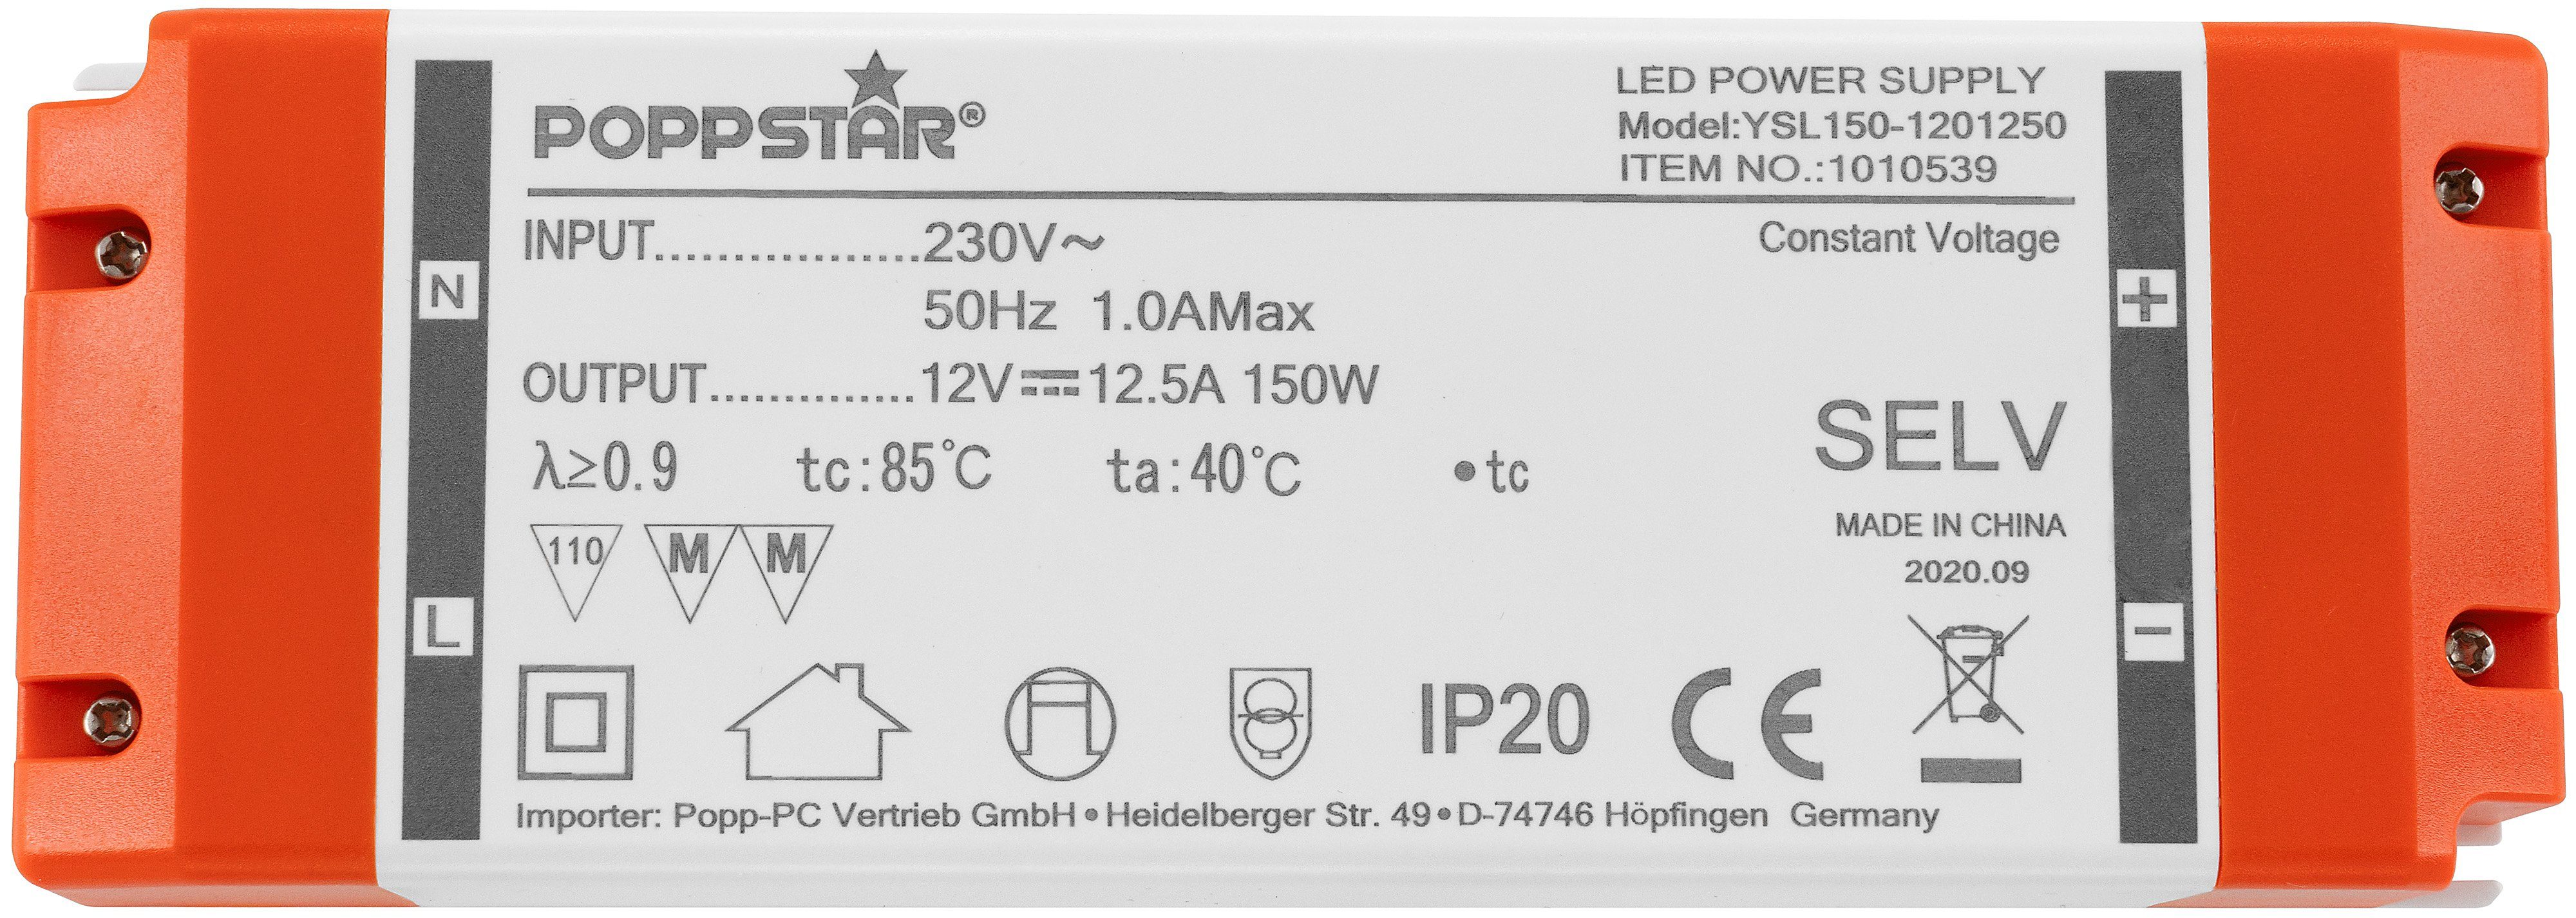 DC / LED W LEDs) 150 Trafo Transformator 1,5 bis 12V Watt für 230V AC Trafo (12V LED Poppstar 12,5A